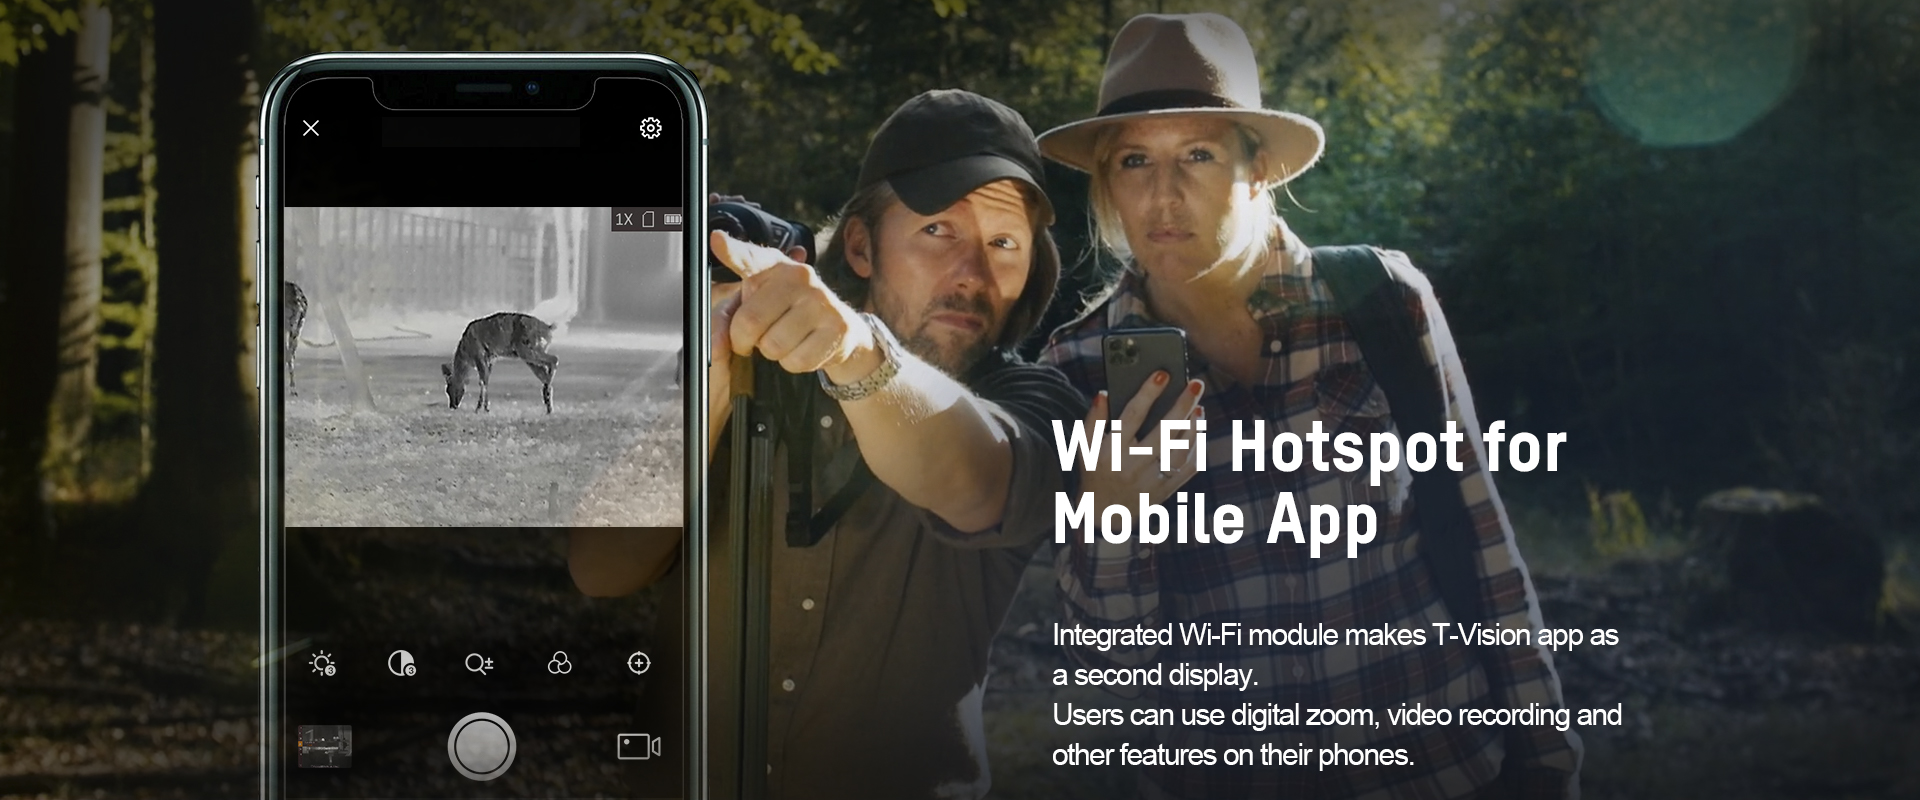 05-Wi-Fi Hotspot for T-Vision Mobile App_LYNXPro.jpg